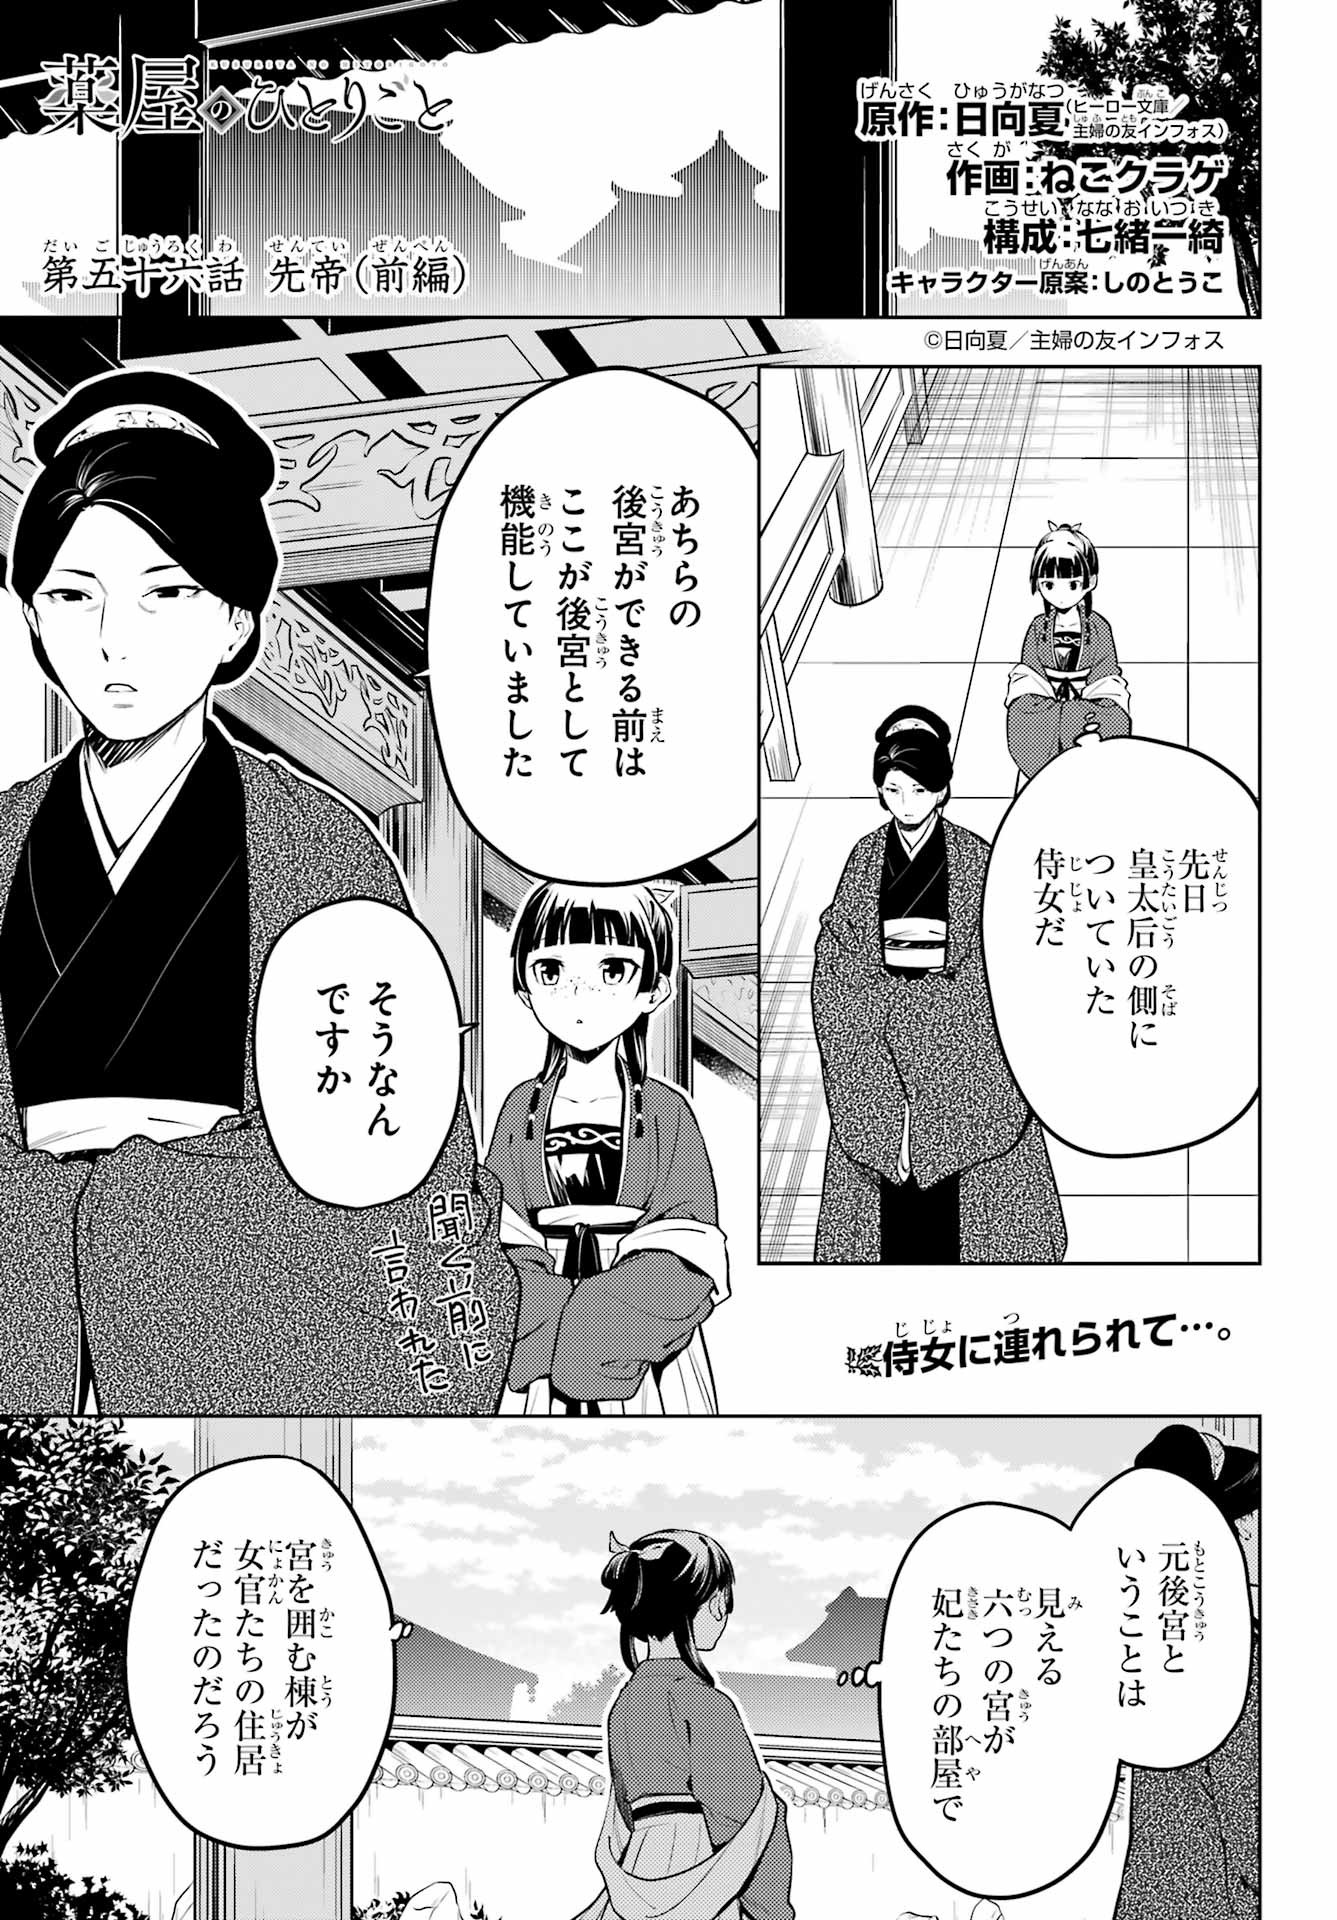 Kusuriya no Hitorigoto - Chapter 56 - Page 1